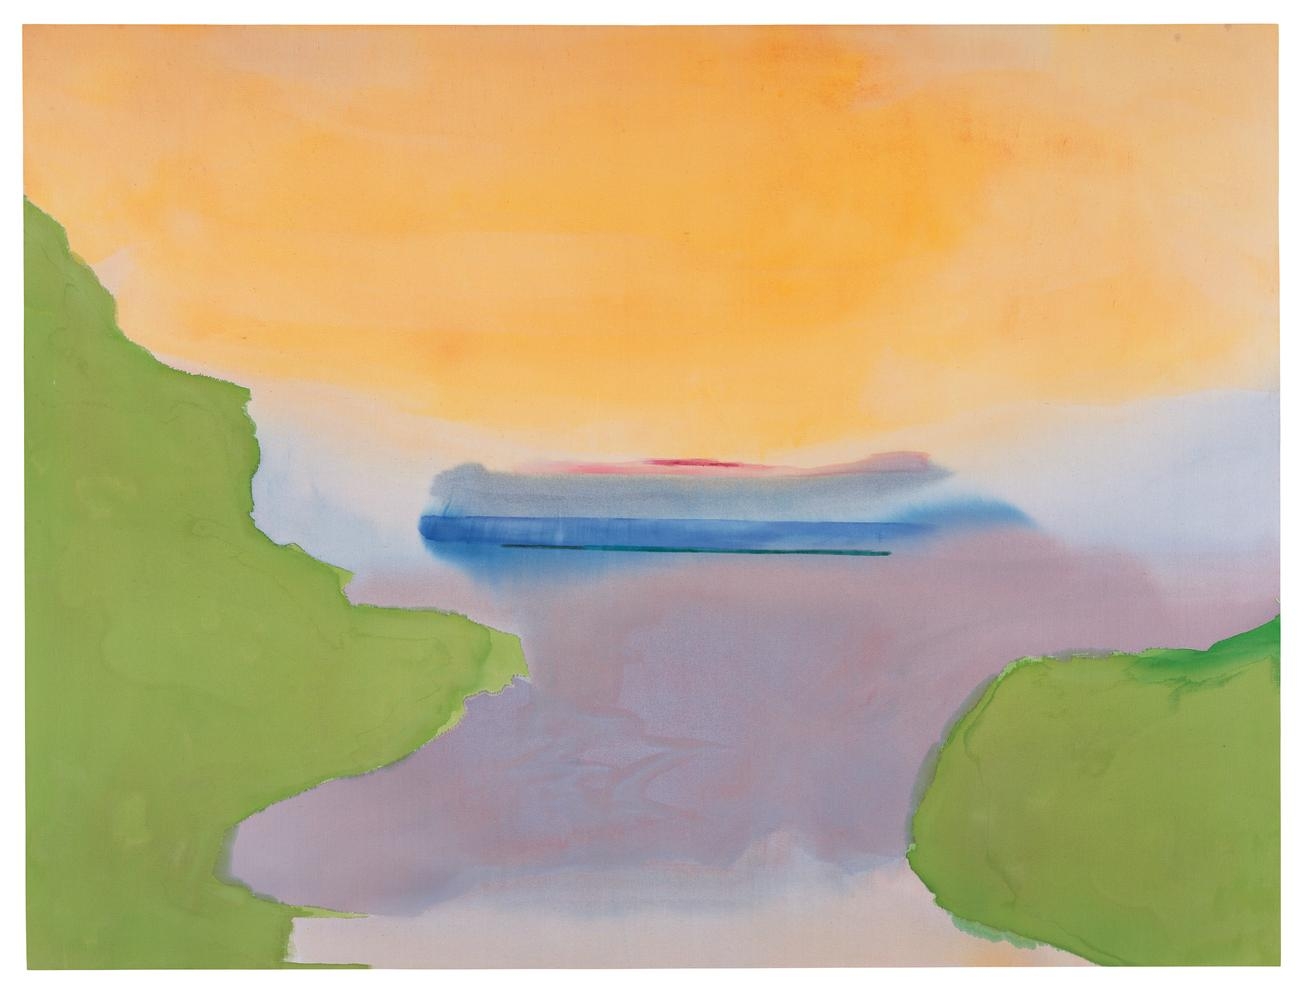 Helen Frankenthaler
Corniche
1974
acrylic on canvas&amp;nbsp;
72 x 96 inches (182.9 x 243.8 cm)&amp;nbsp;